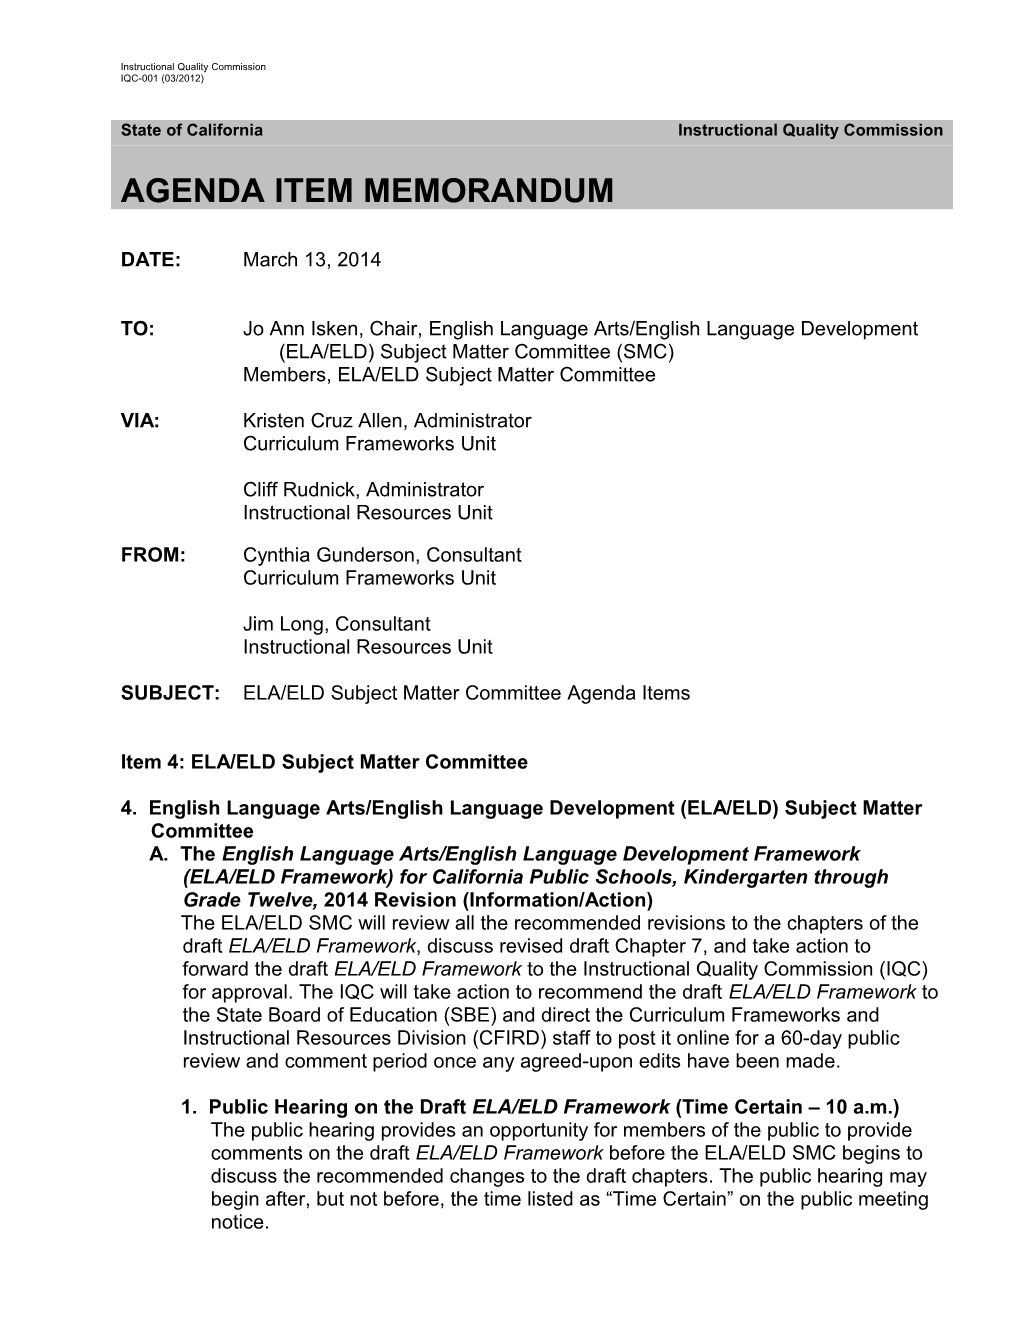 ELA-ELD SMC Memo 2014 - Instructional Quality Commission (CA Dept of Education)